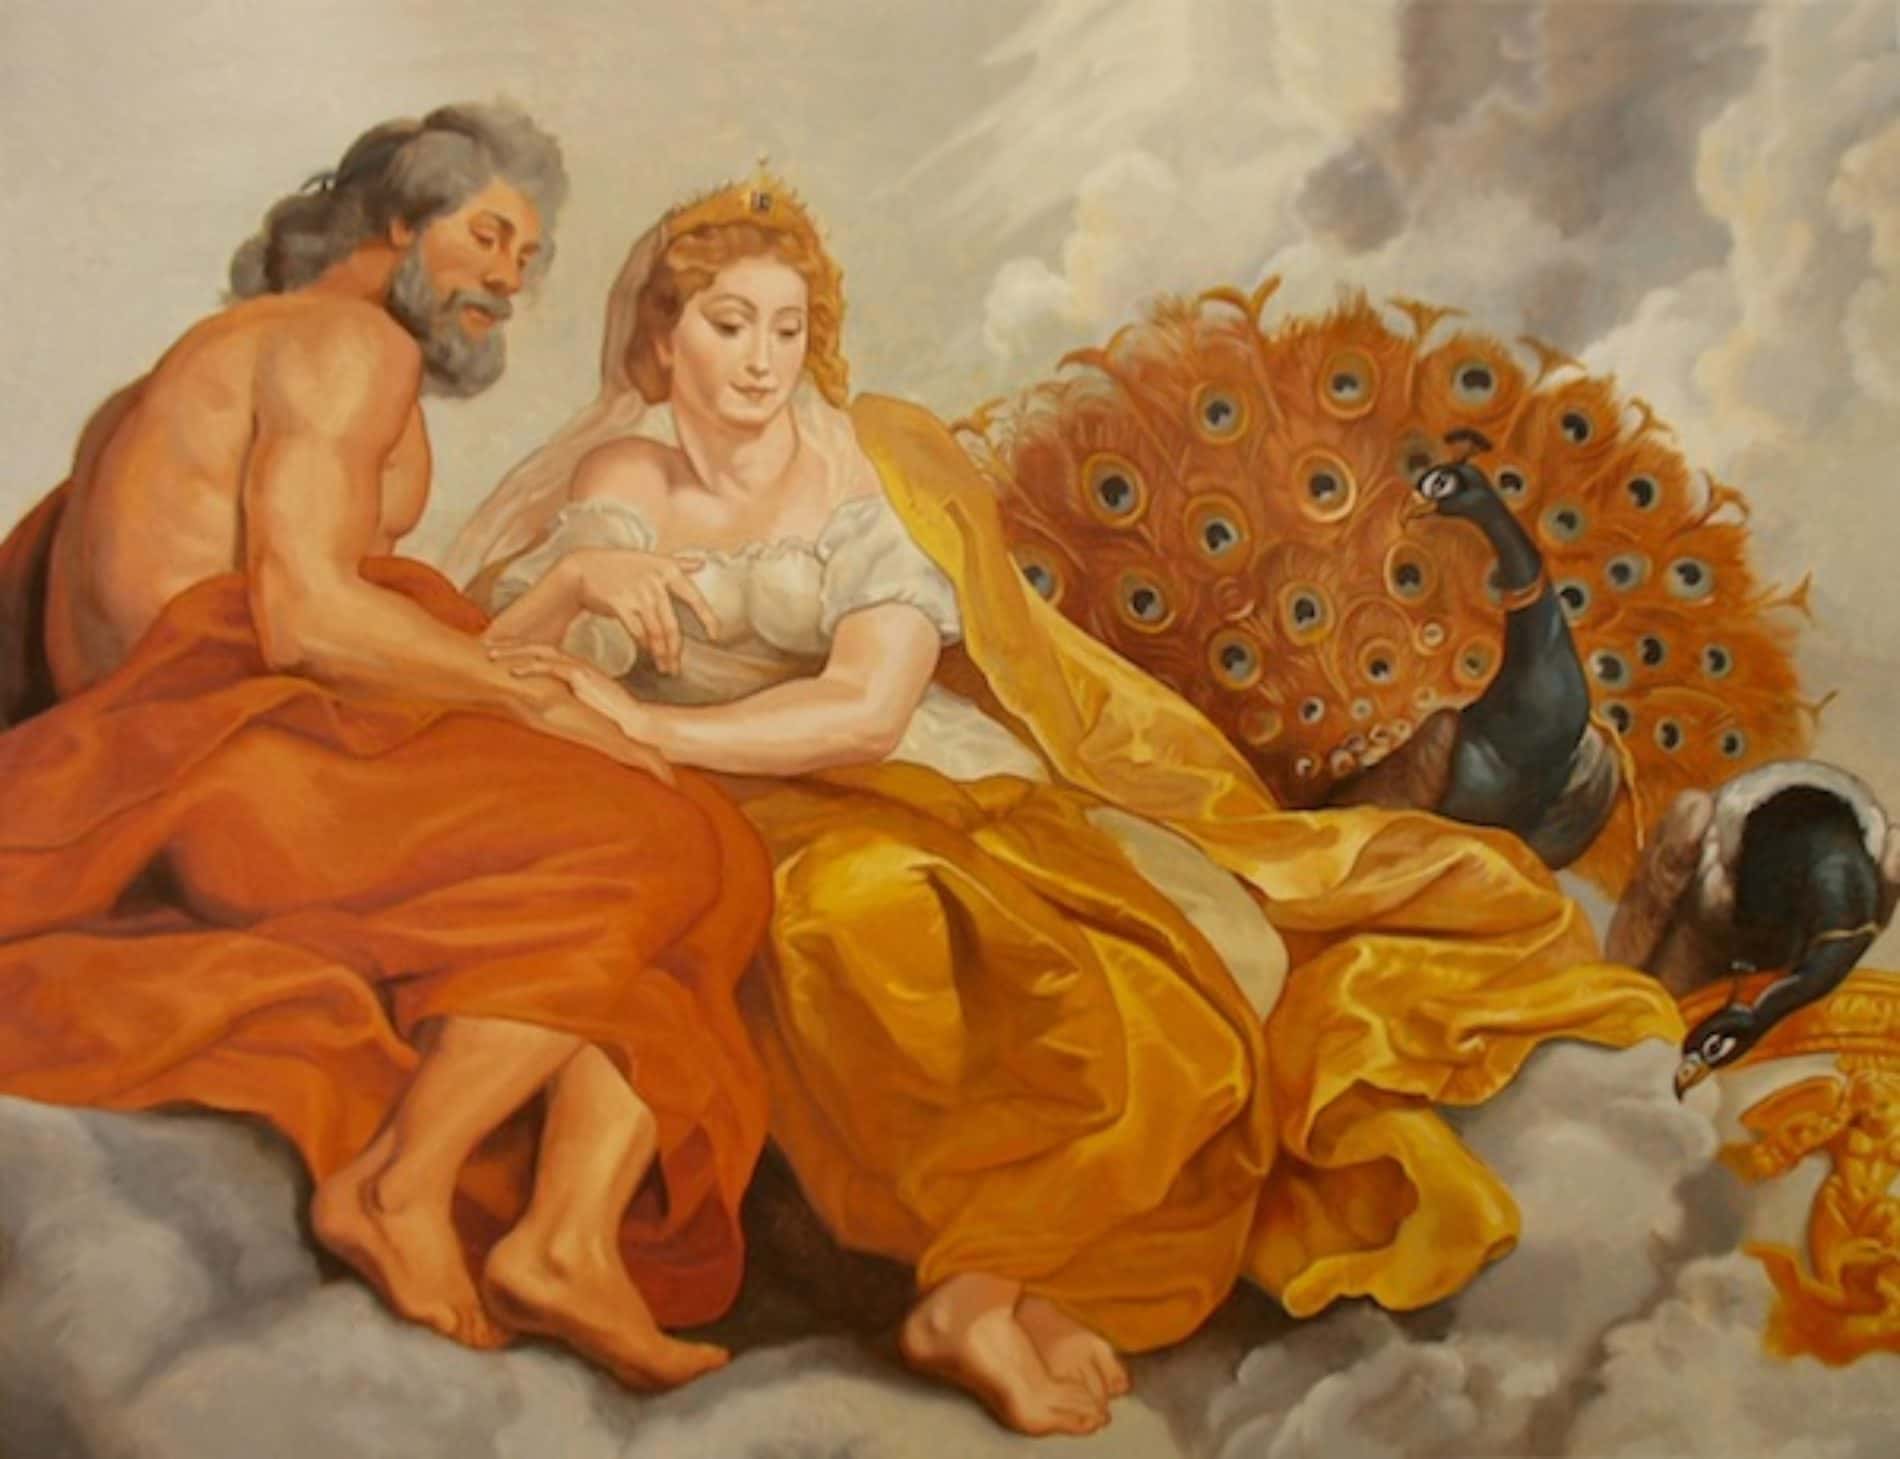 44 Thunderous Facts About Zeus